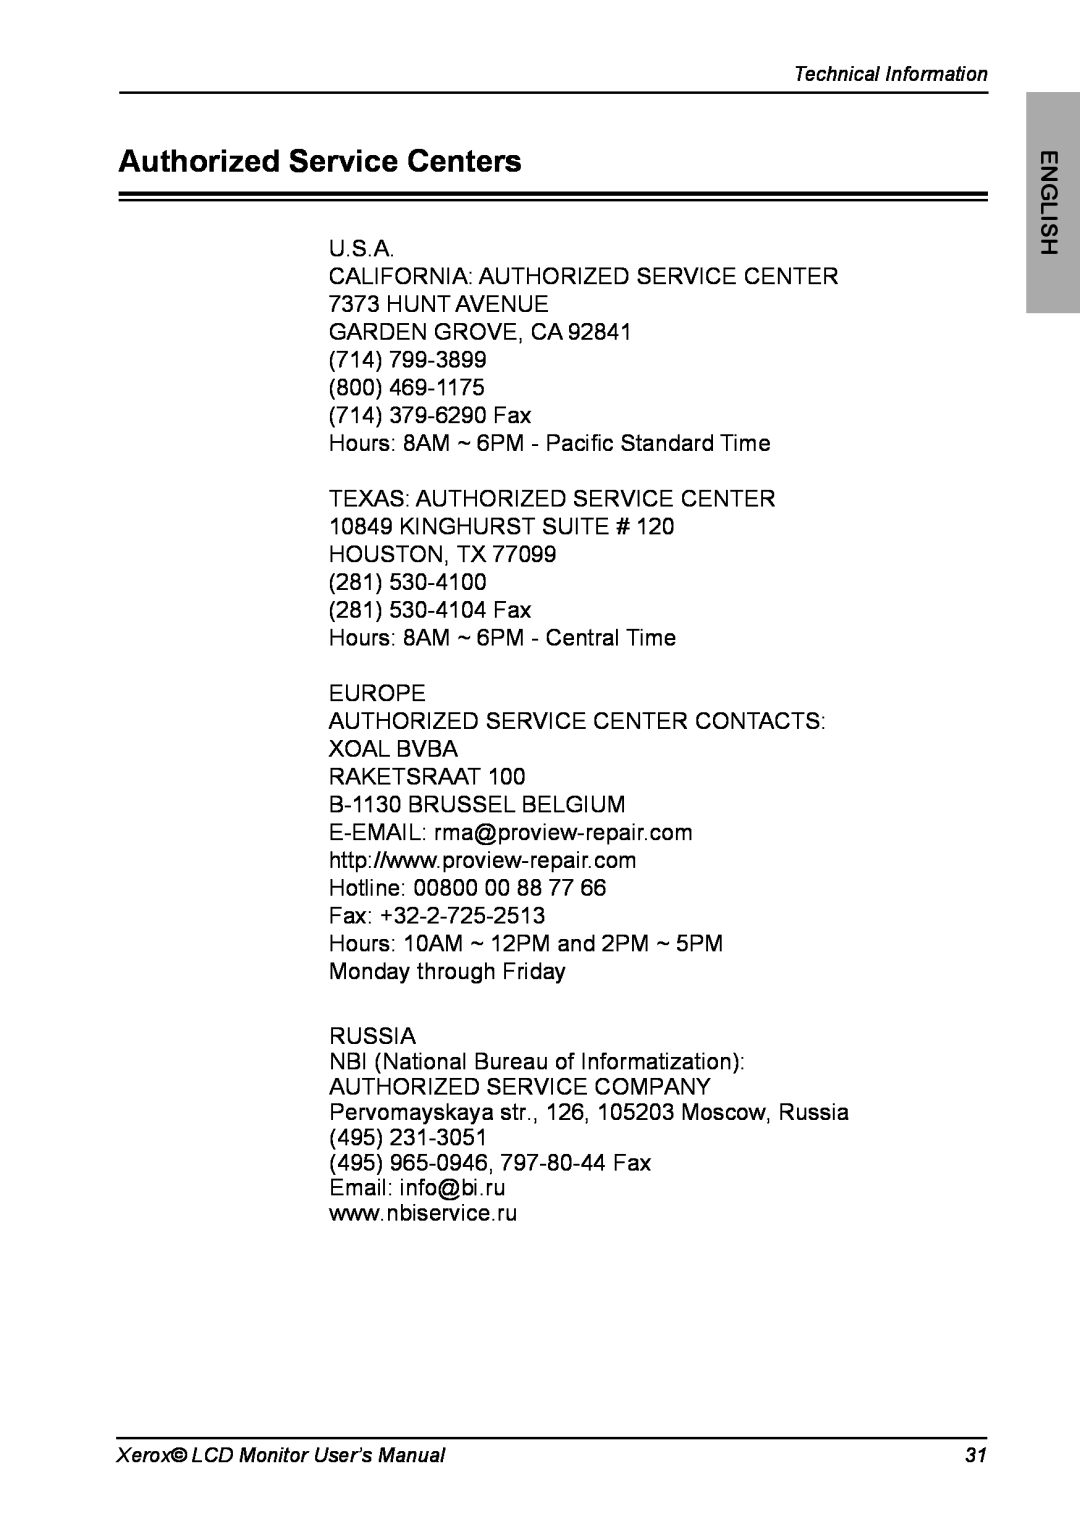 Xerox XM7-19w manual Authorized Service Centers, English 